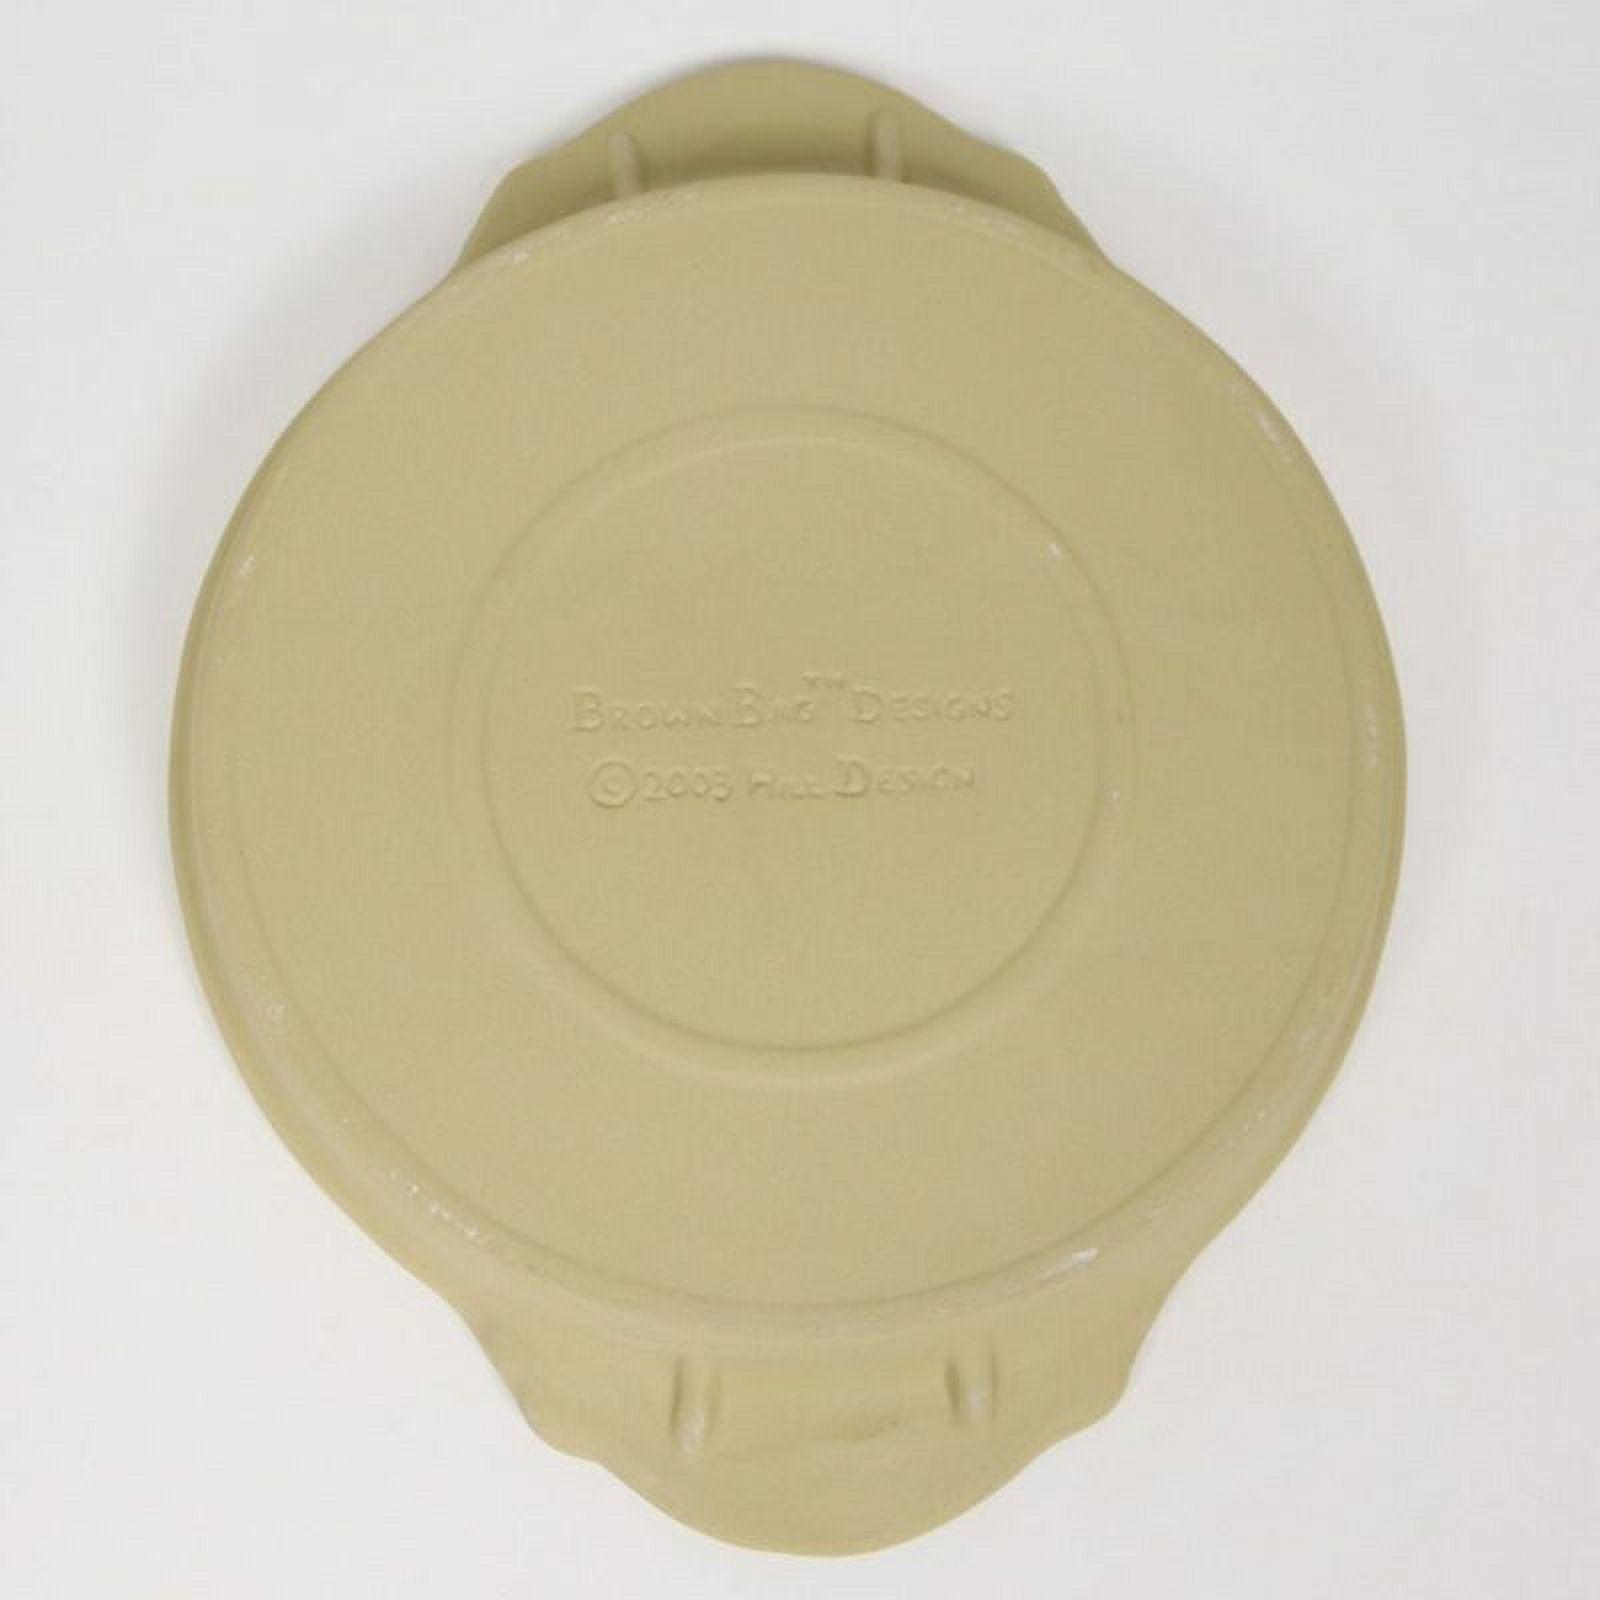 British Isles Ceramic Shortbread Pan